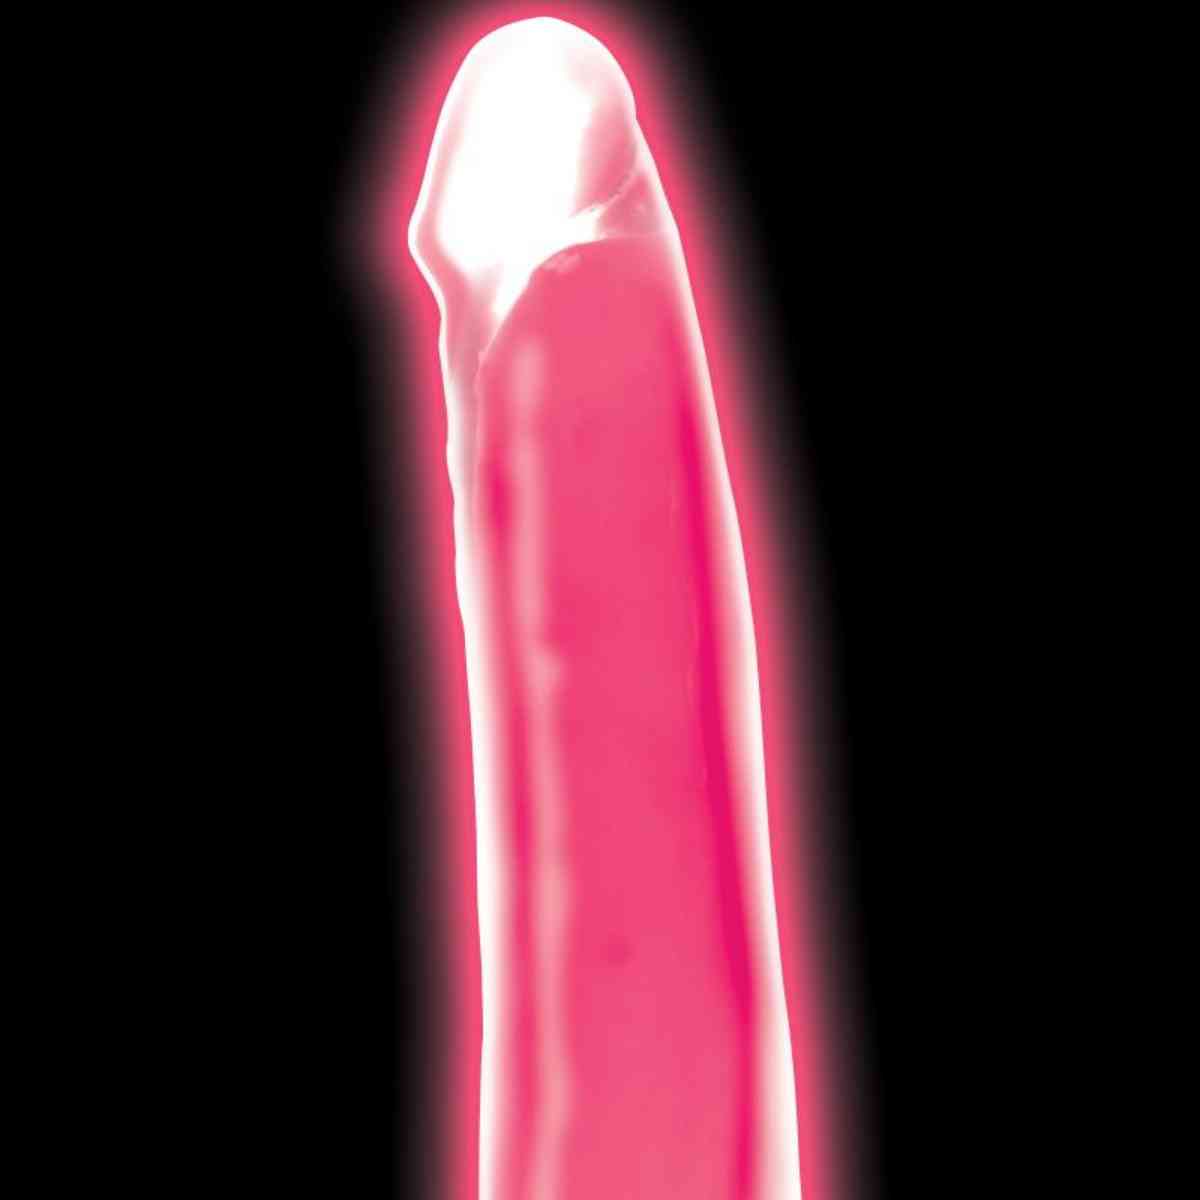 Pinker Dildo "Glow in the Dark" im Dunkeln